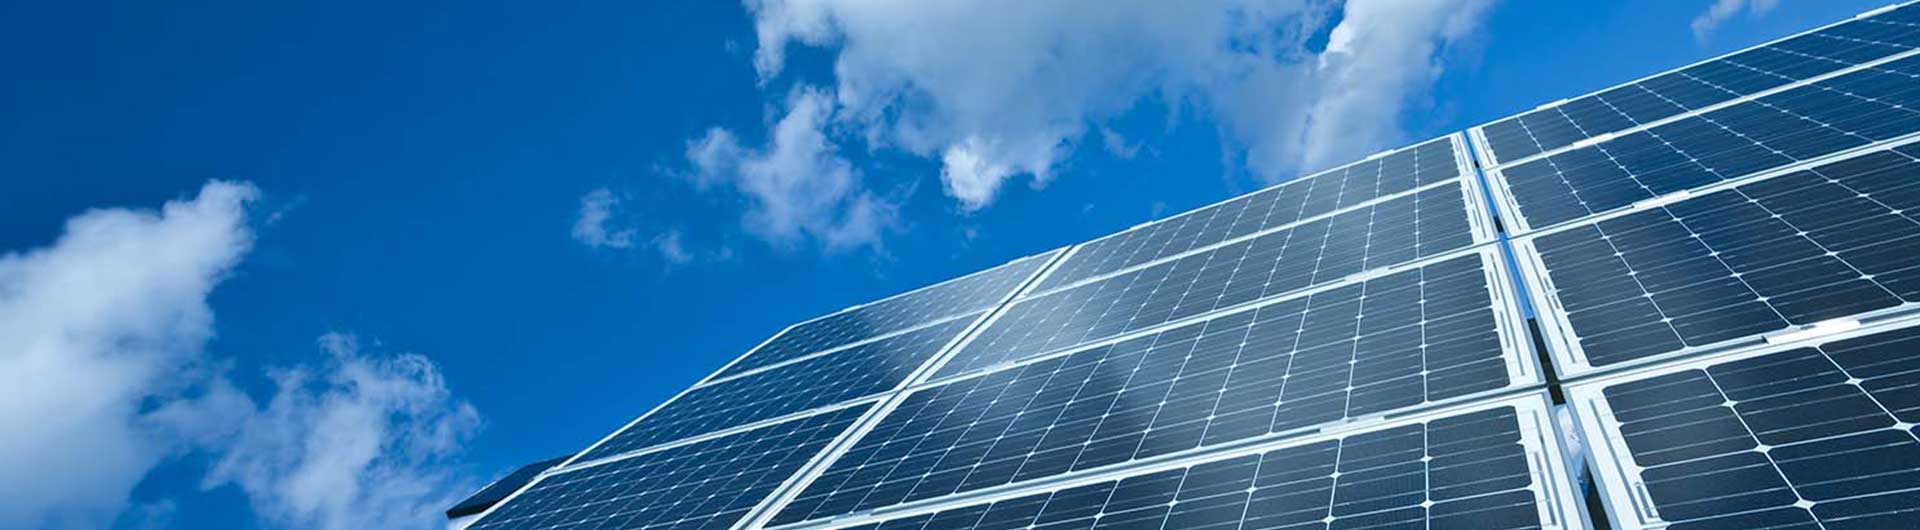 Clean Green Energy Solar panel